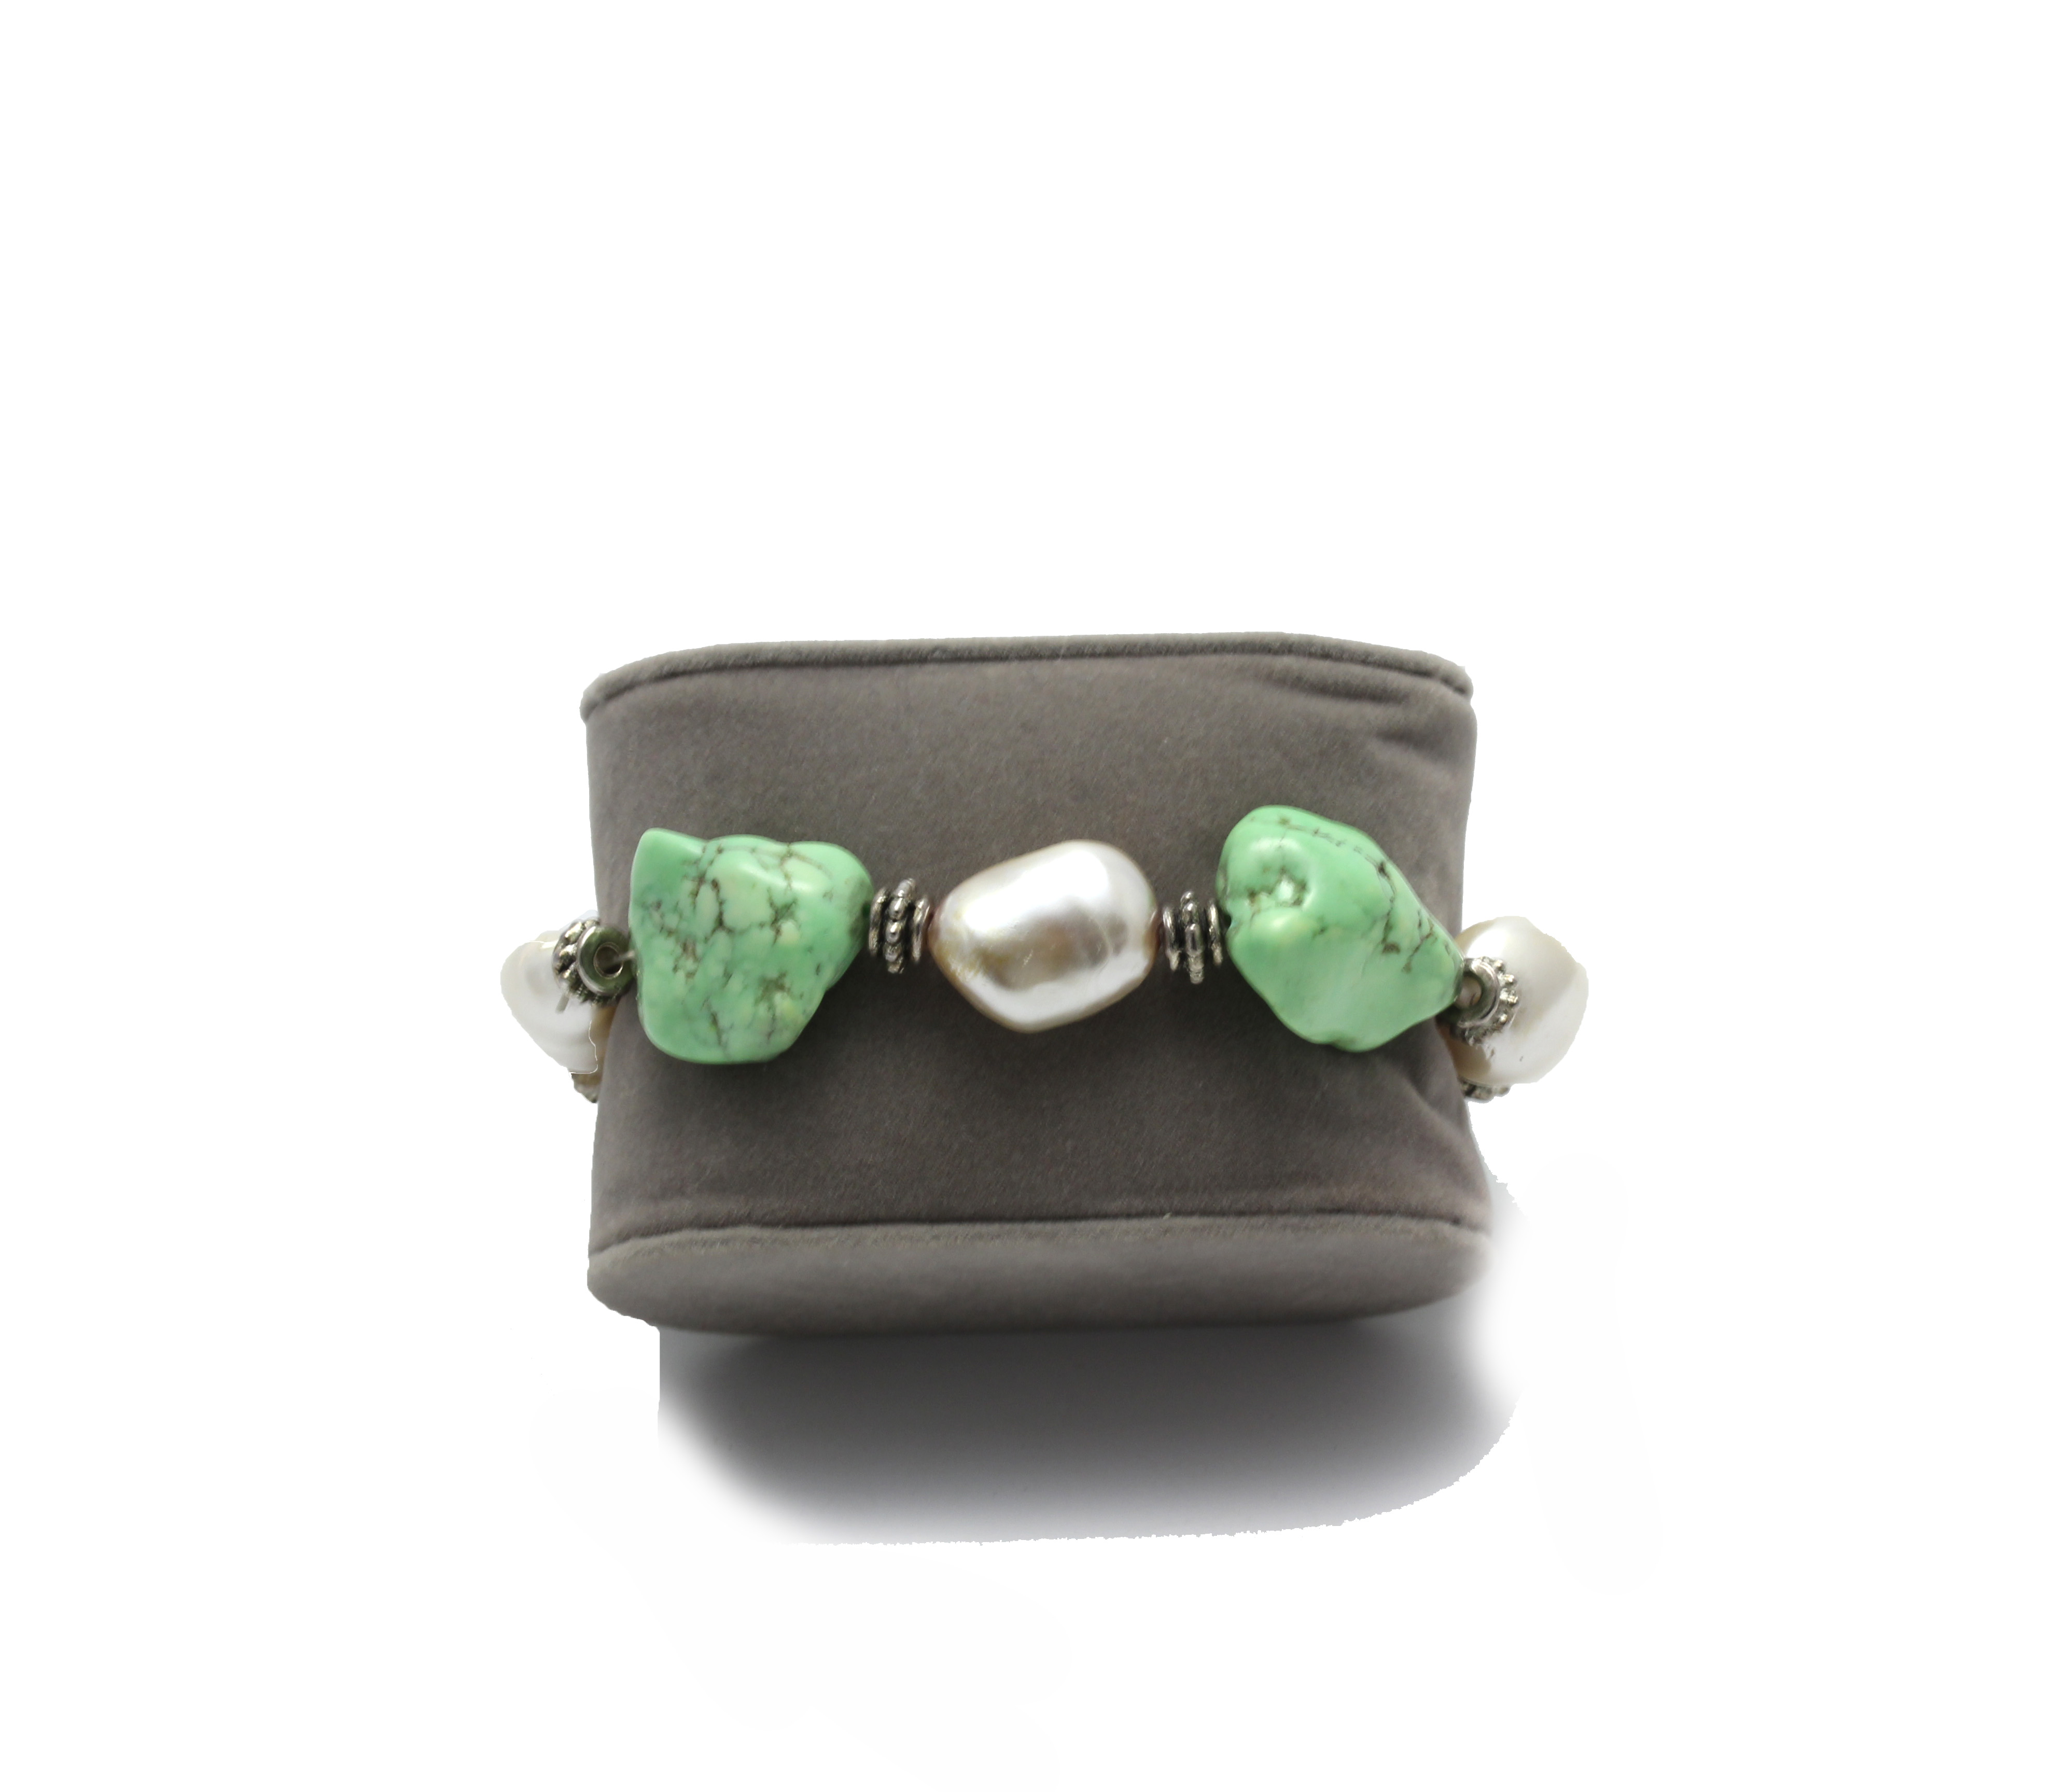 Bracelet of Light Green Magnesite Chunks and Baroque Pearls